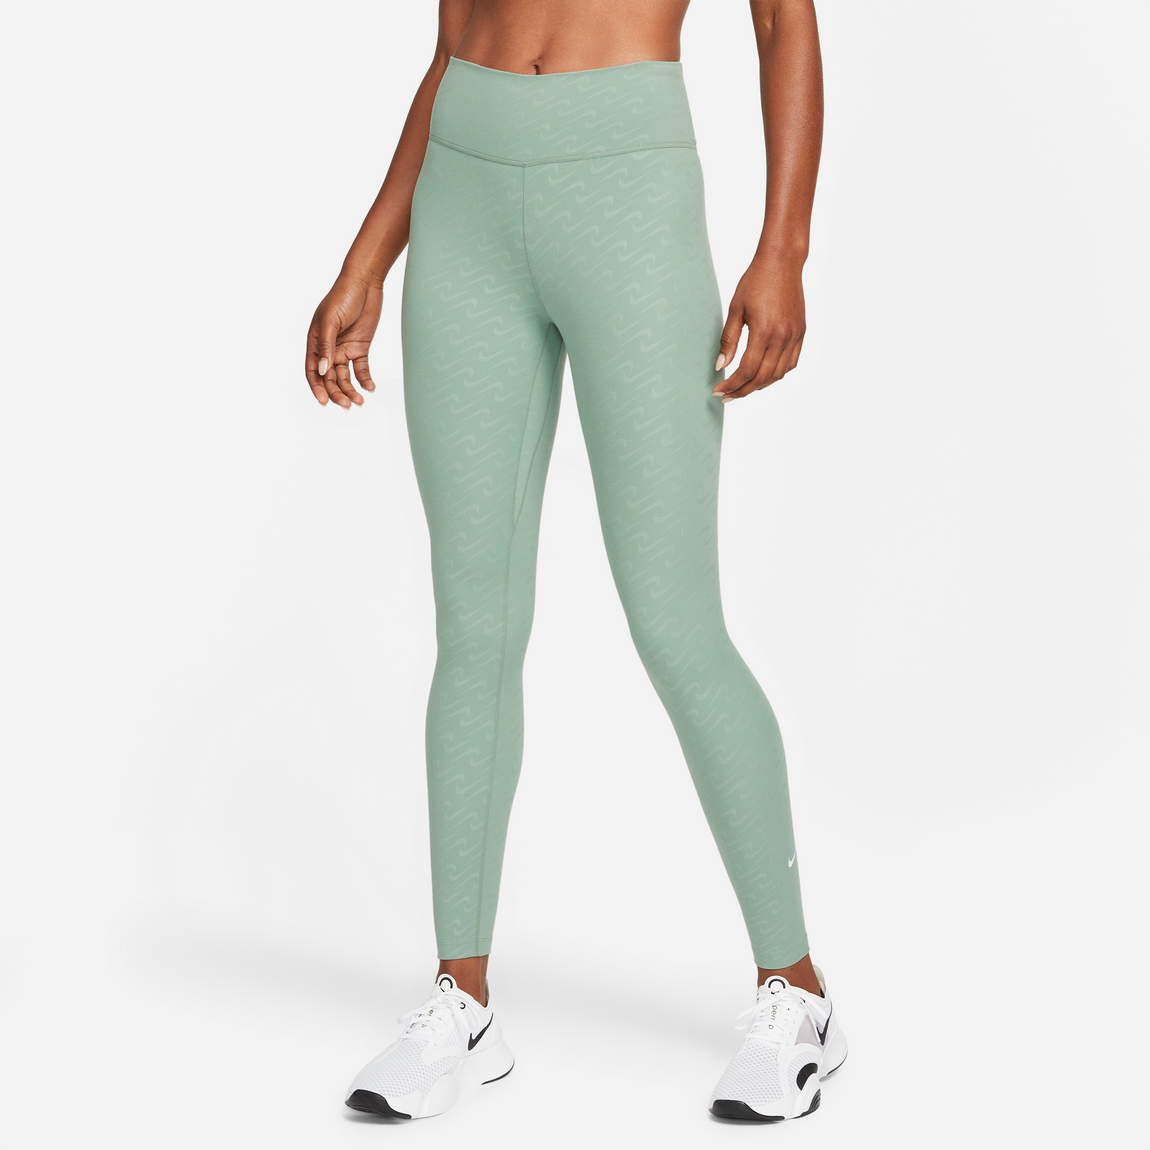 NIKE Women's JORDAN Sport Logo Tight Leggings NWT Emerald / Key Lime SIZE:  SMALL